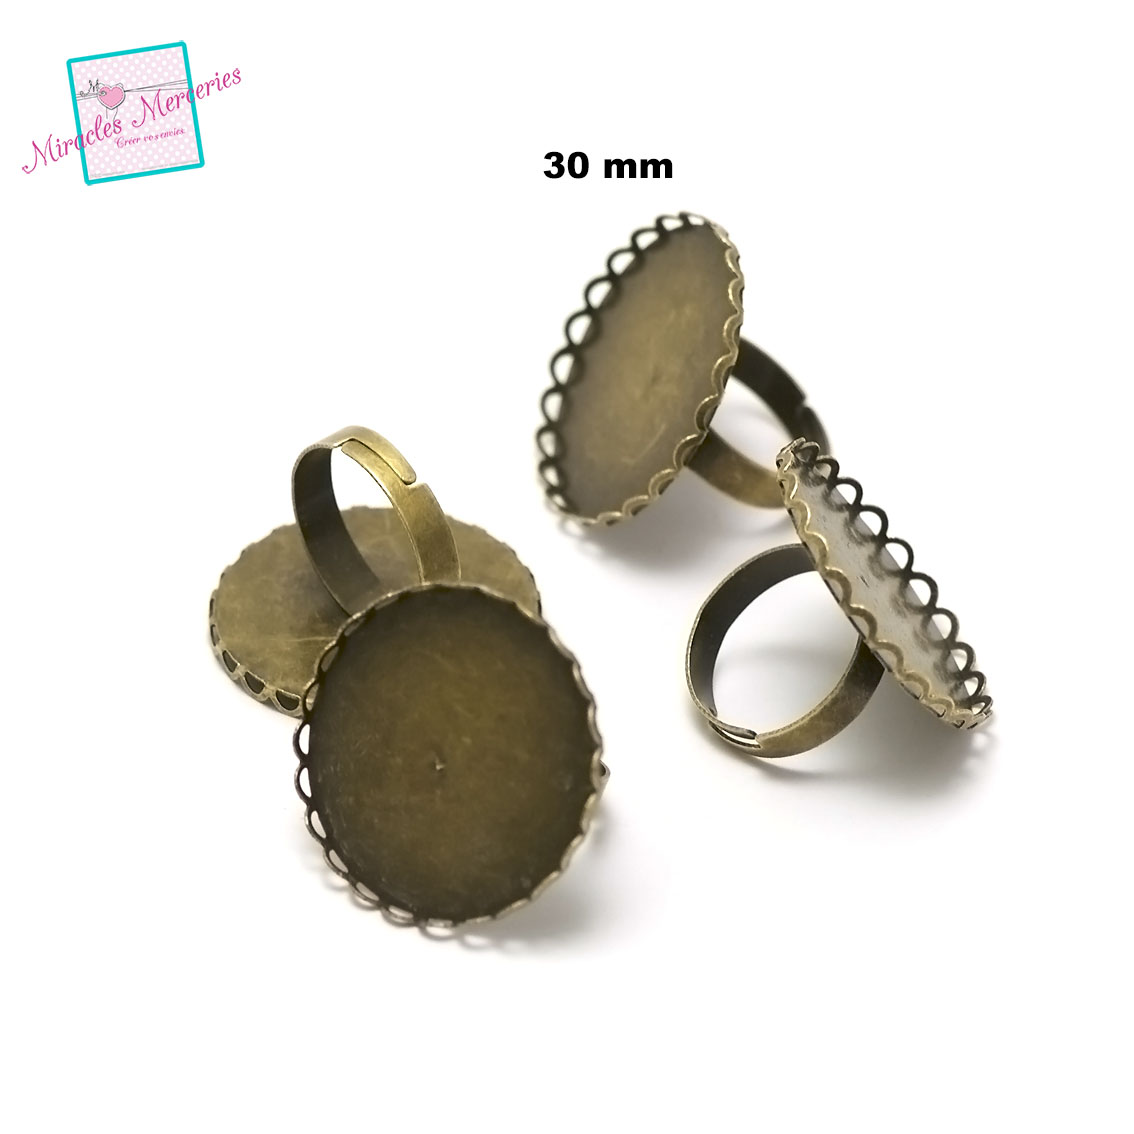 4 support cabochon bague 30 mm, ronde bronze,dentelle